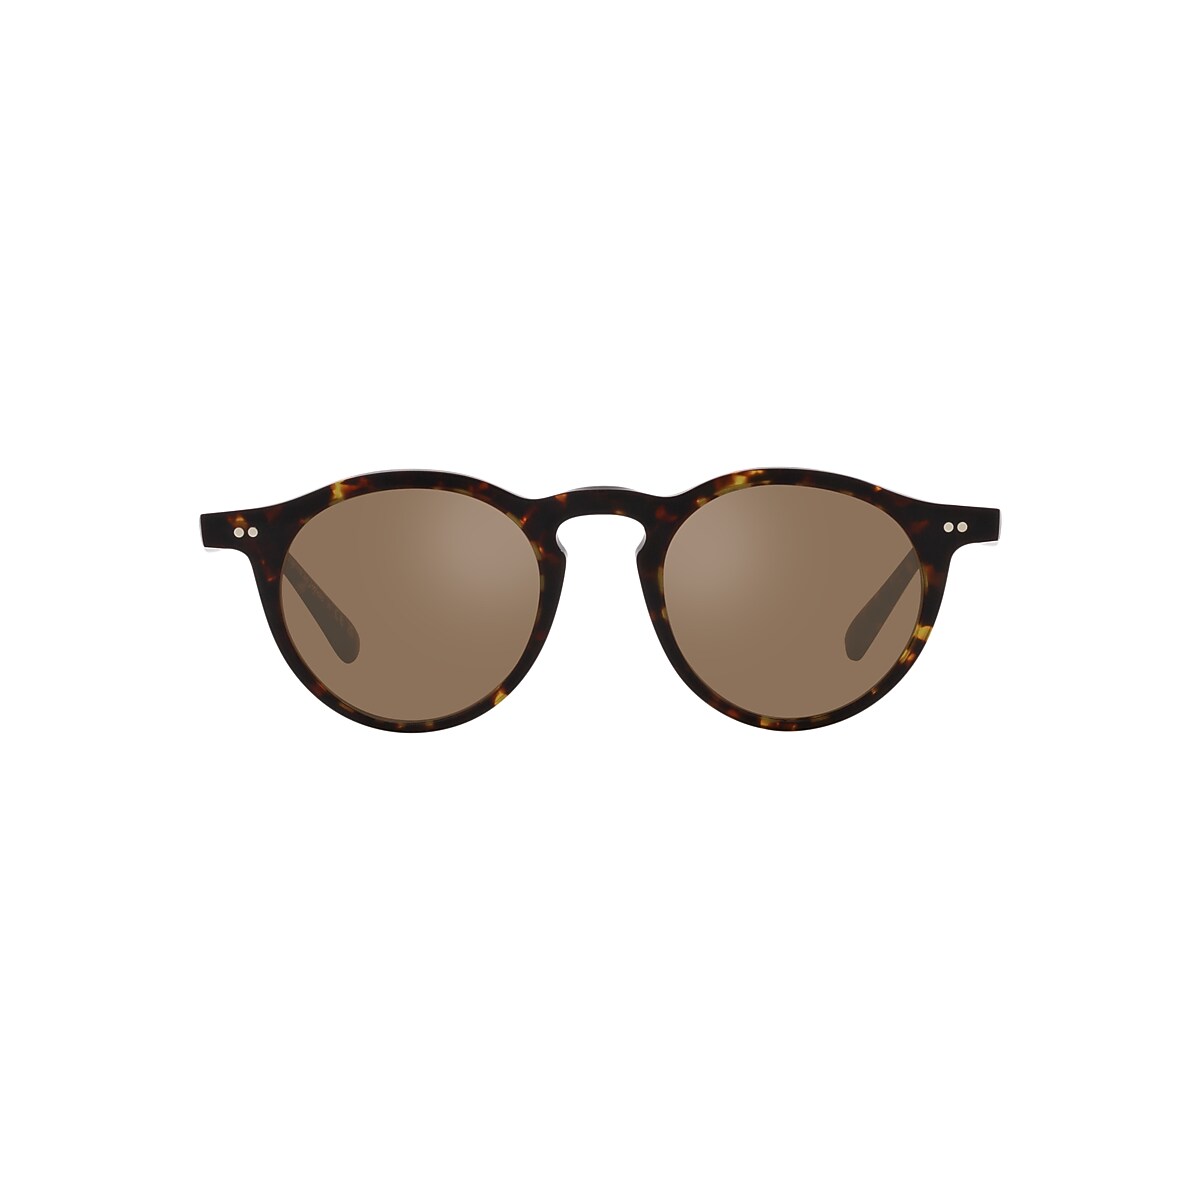 Oliver OP-13 Sun Sunglasses in Semi-Matte Atago Tortoise | Oliver®